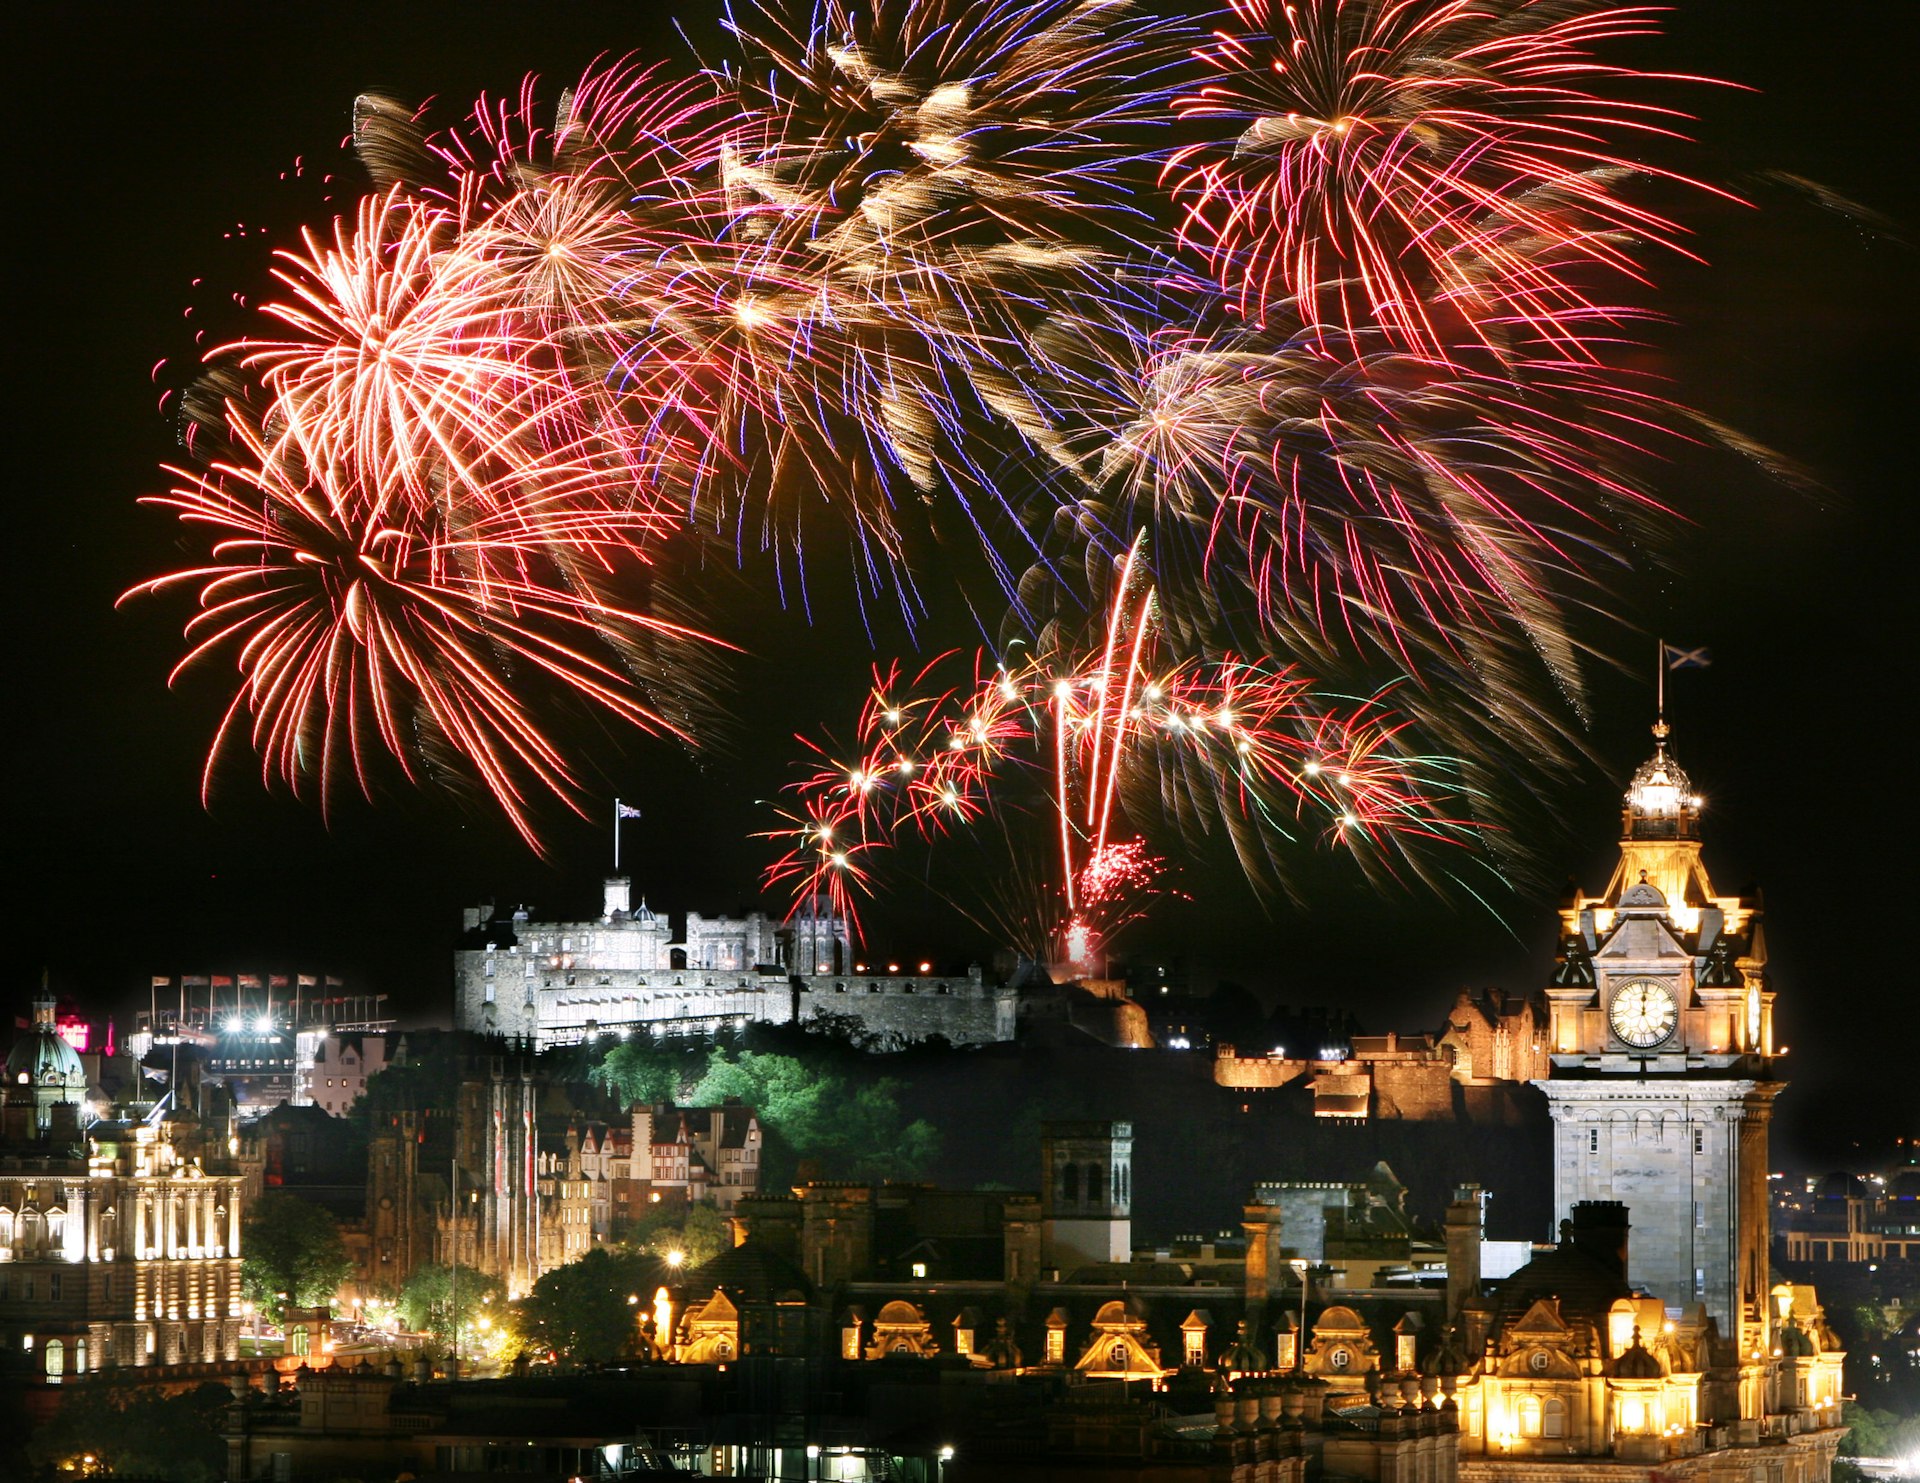 Fireworks over Edinburgh's city center for Hogmanay (New Year’s Eve) during the Edinburgh Festival and Edinburgh Military Tattoo.